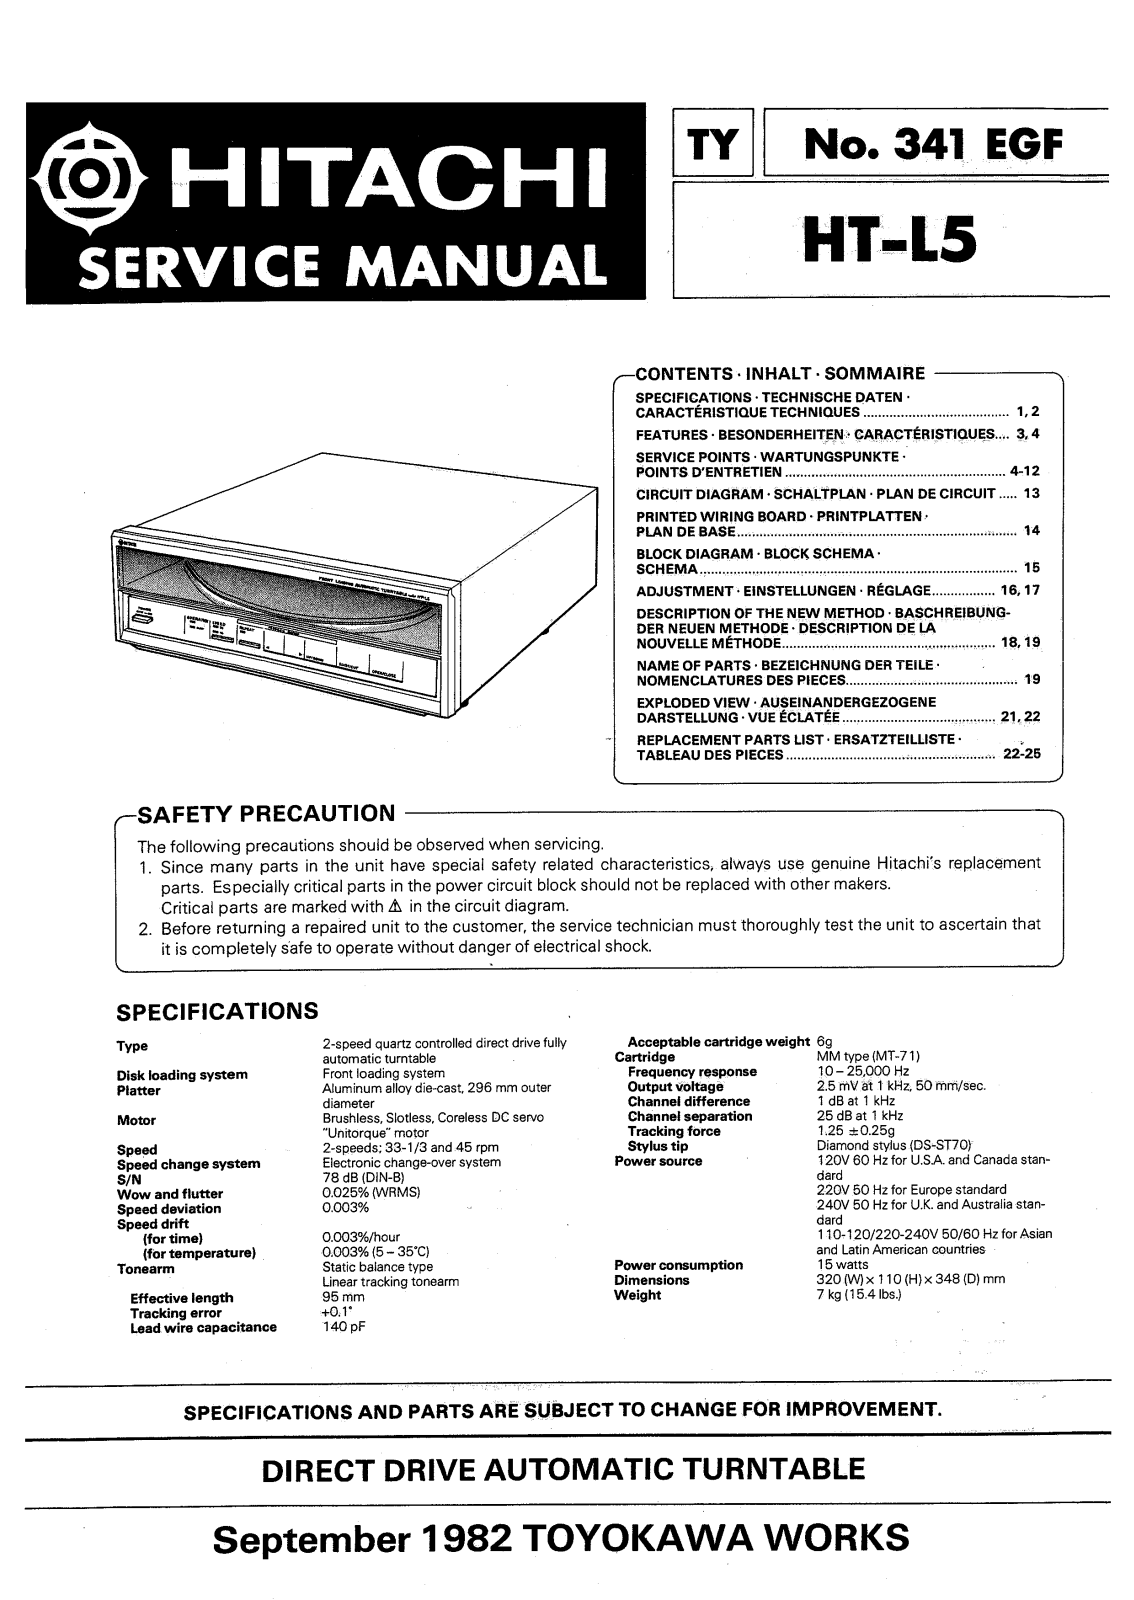 Hitachi HT-L5 Service Manual